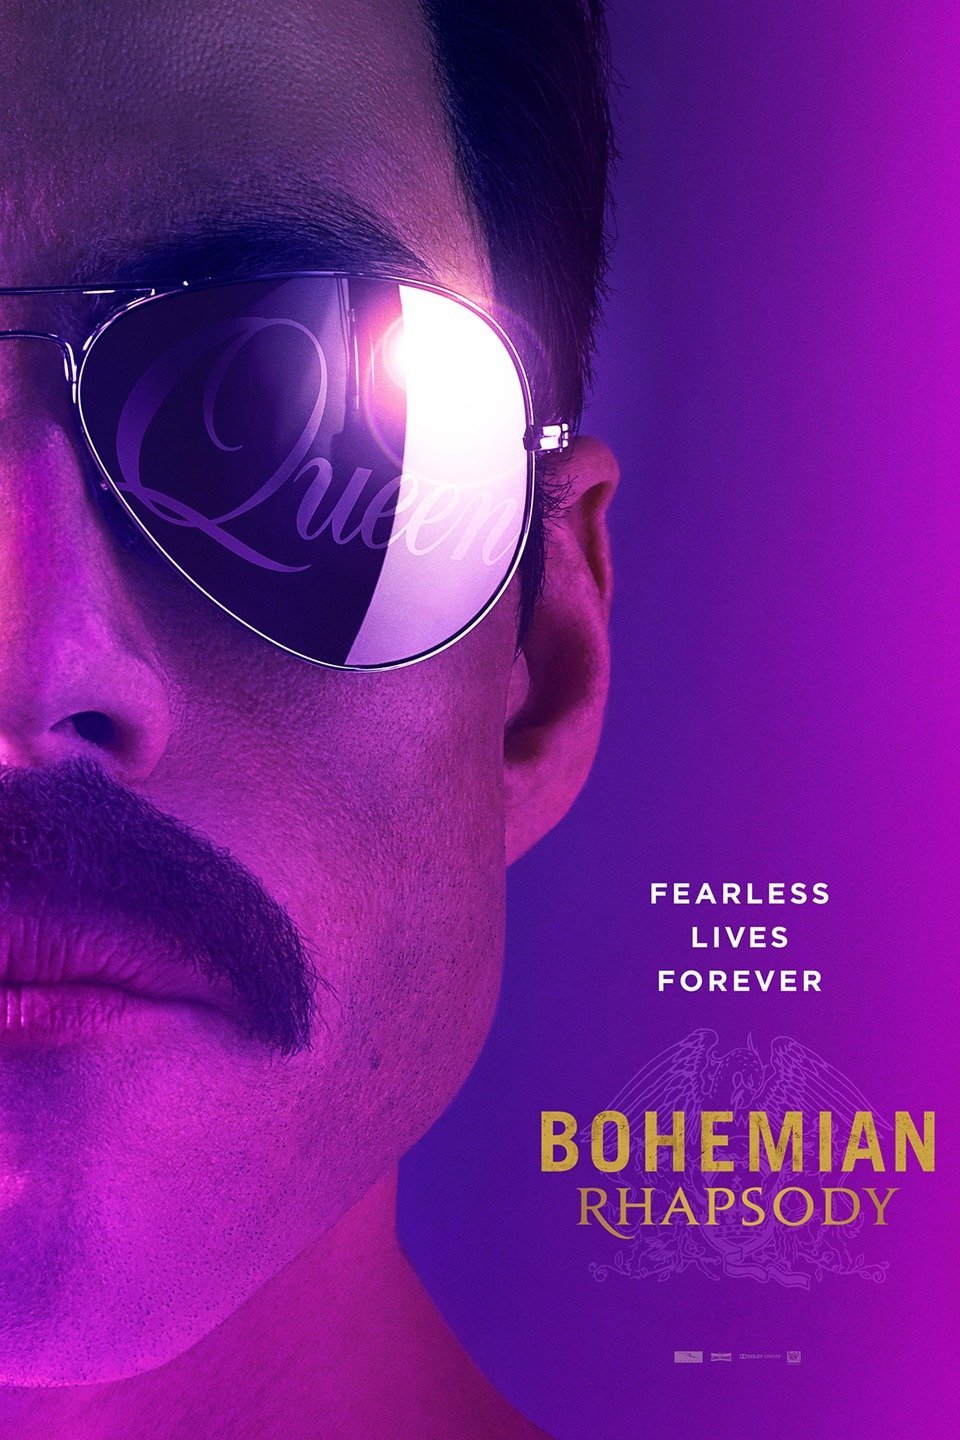 Bohemian Rhapsody download the last version for mac